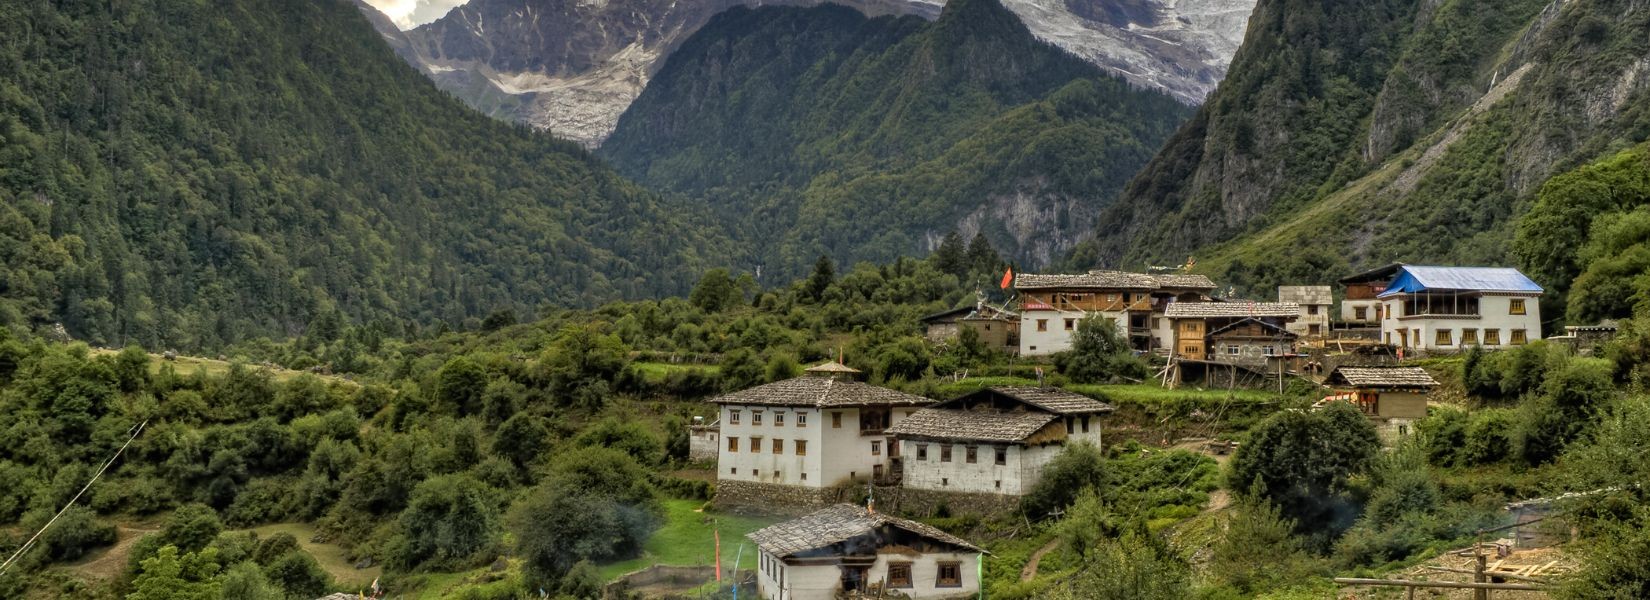 Accommodation During Trek in Nepal